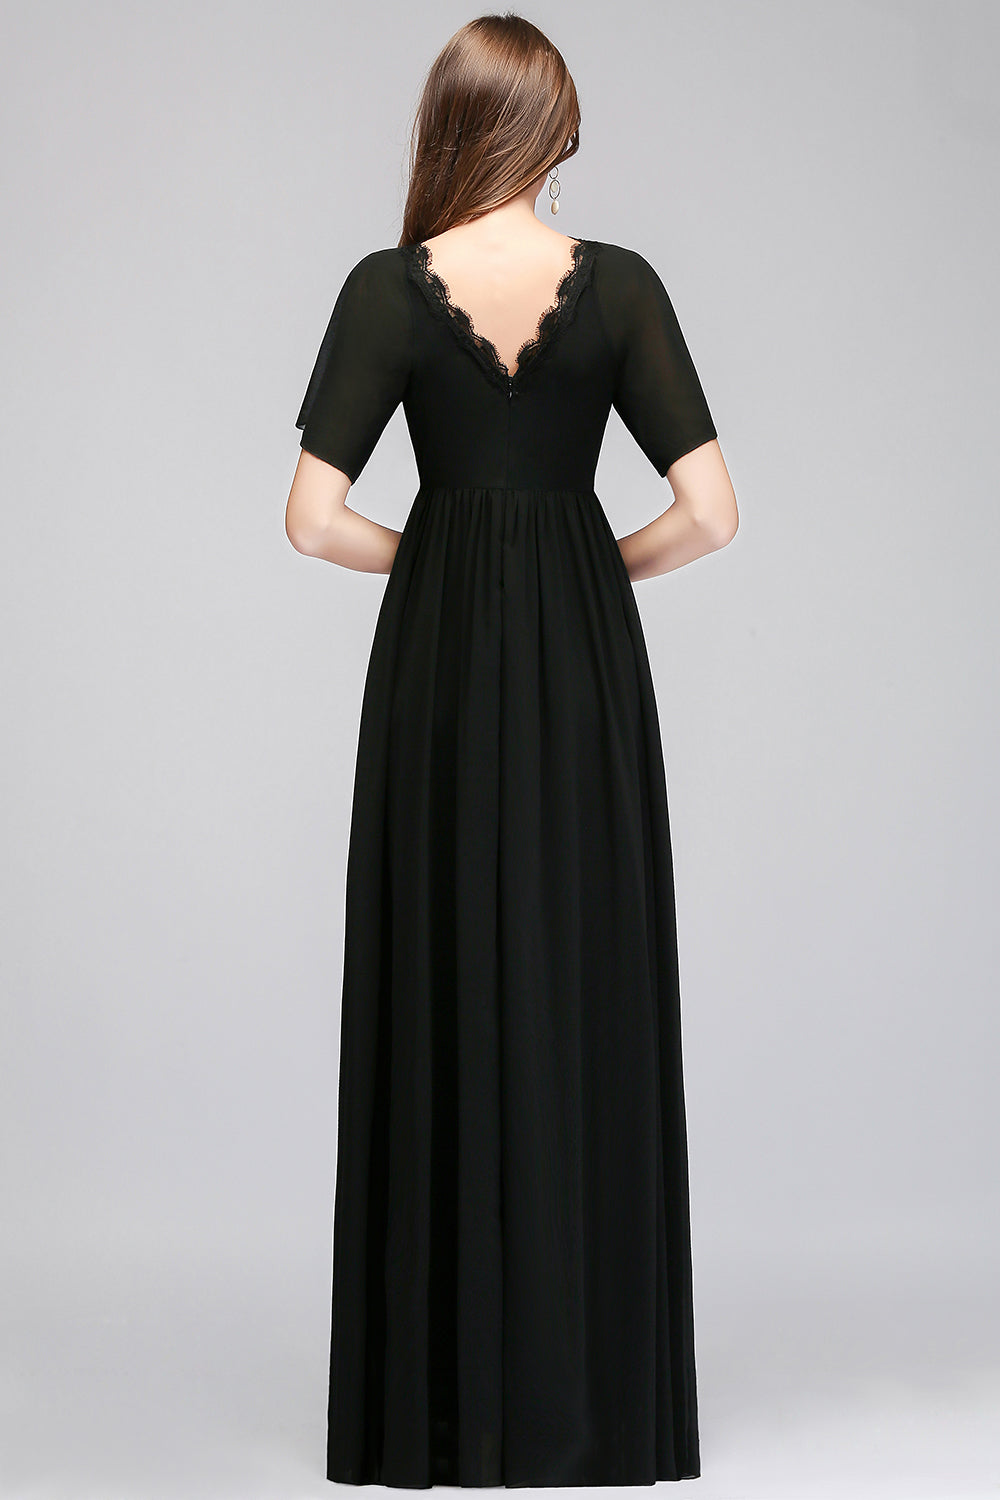 Affordable Chiffon Black V-Neck Bridesmaid Dresses with Short-Sleeves-27dress